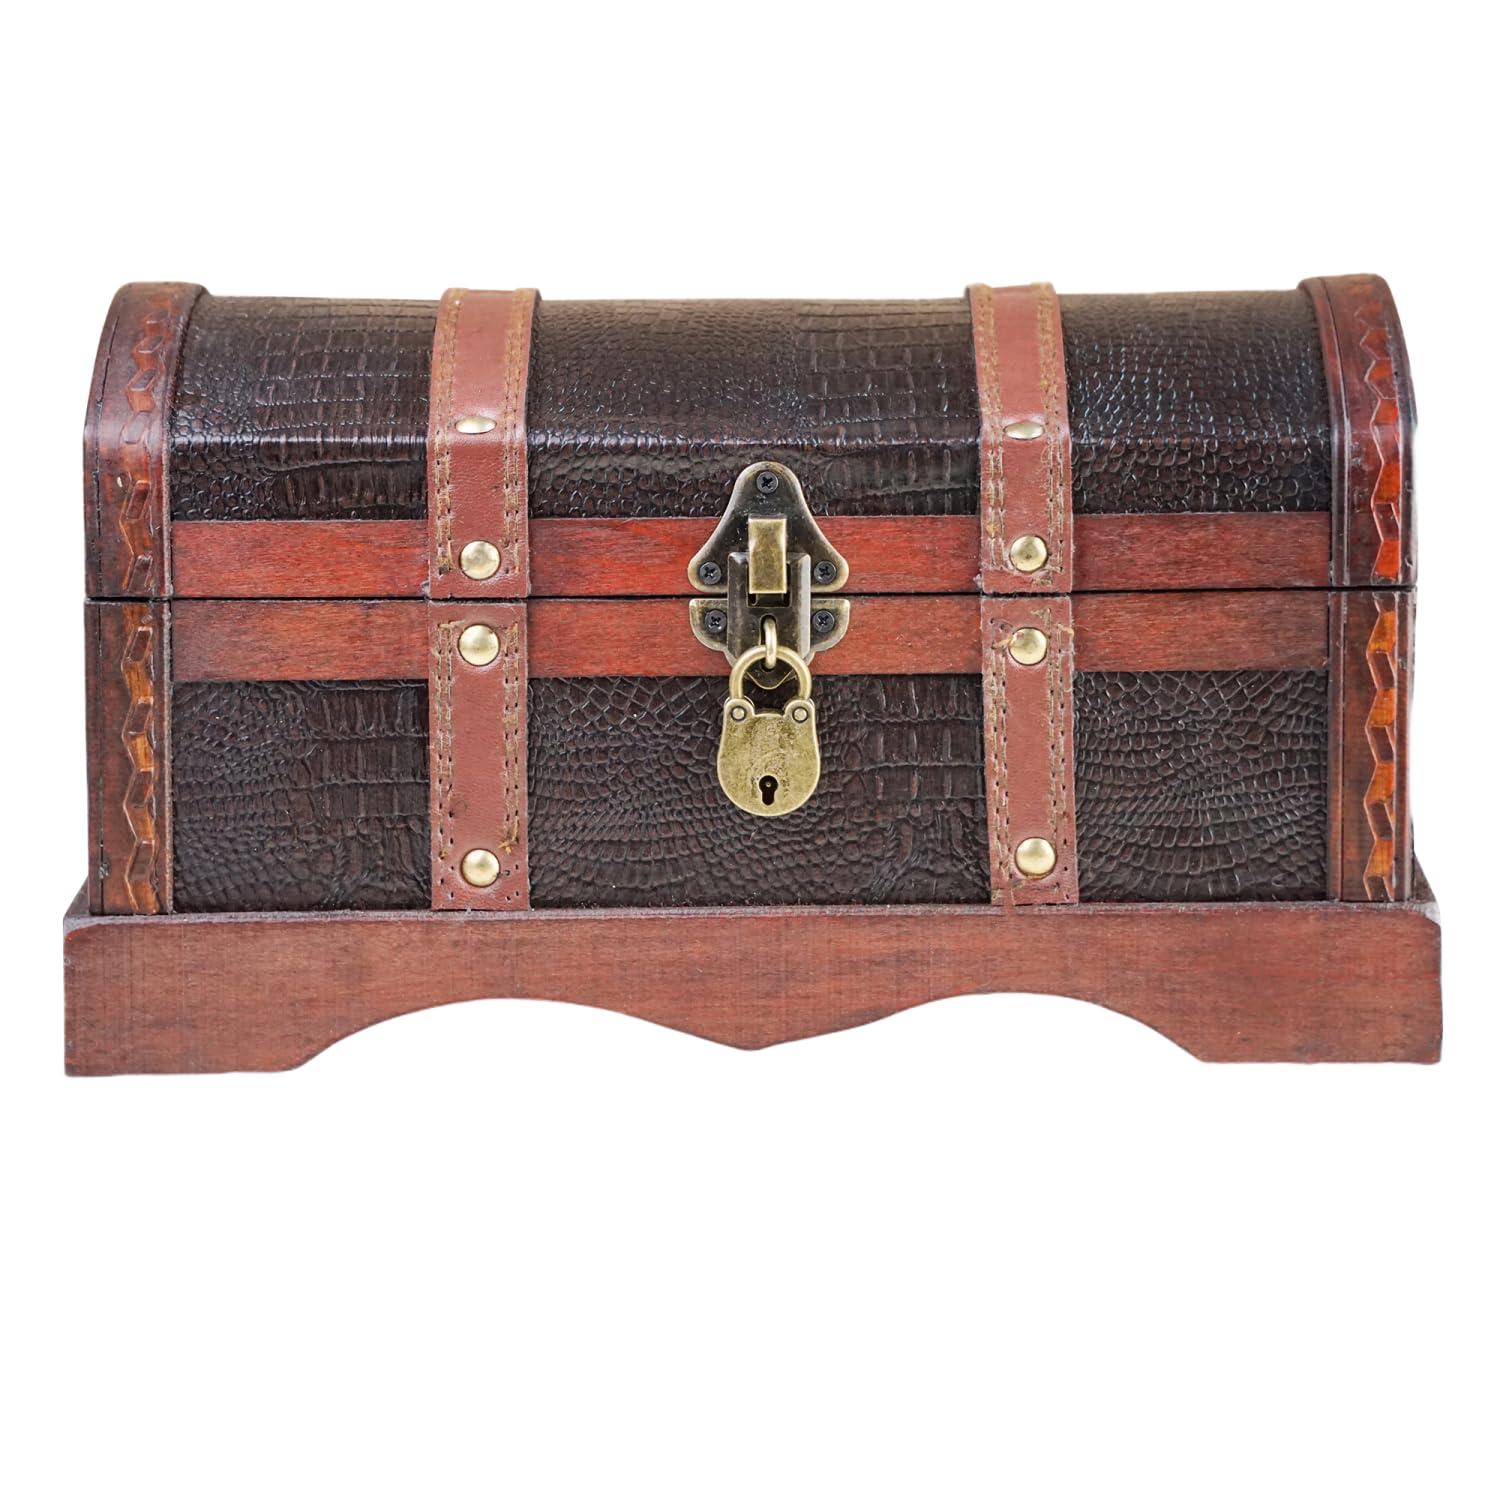 BRYNNBERG - Pirate Treasure Chest Storage Box - Croco 30x17x16cm - Durable Wooden Treasure Chest with Lock - Unique Handmade Decorative Wood Storage Box - Vintage Wood Chest Box - The Best Gift 0